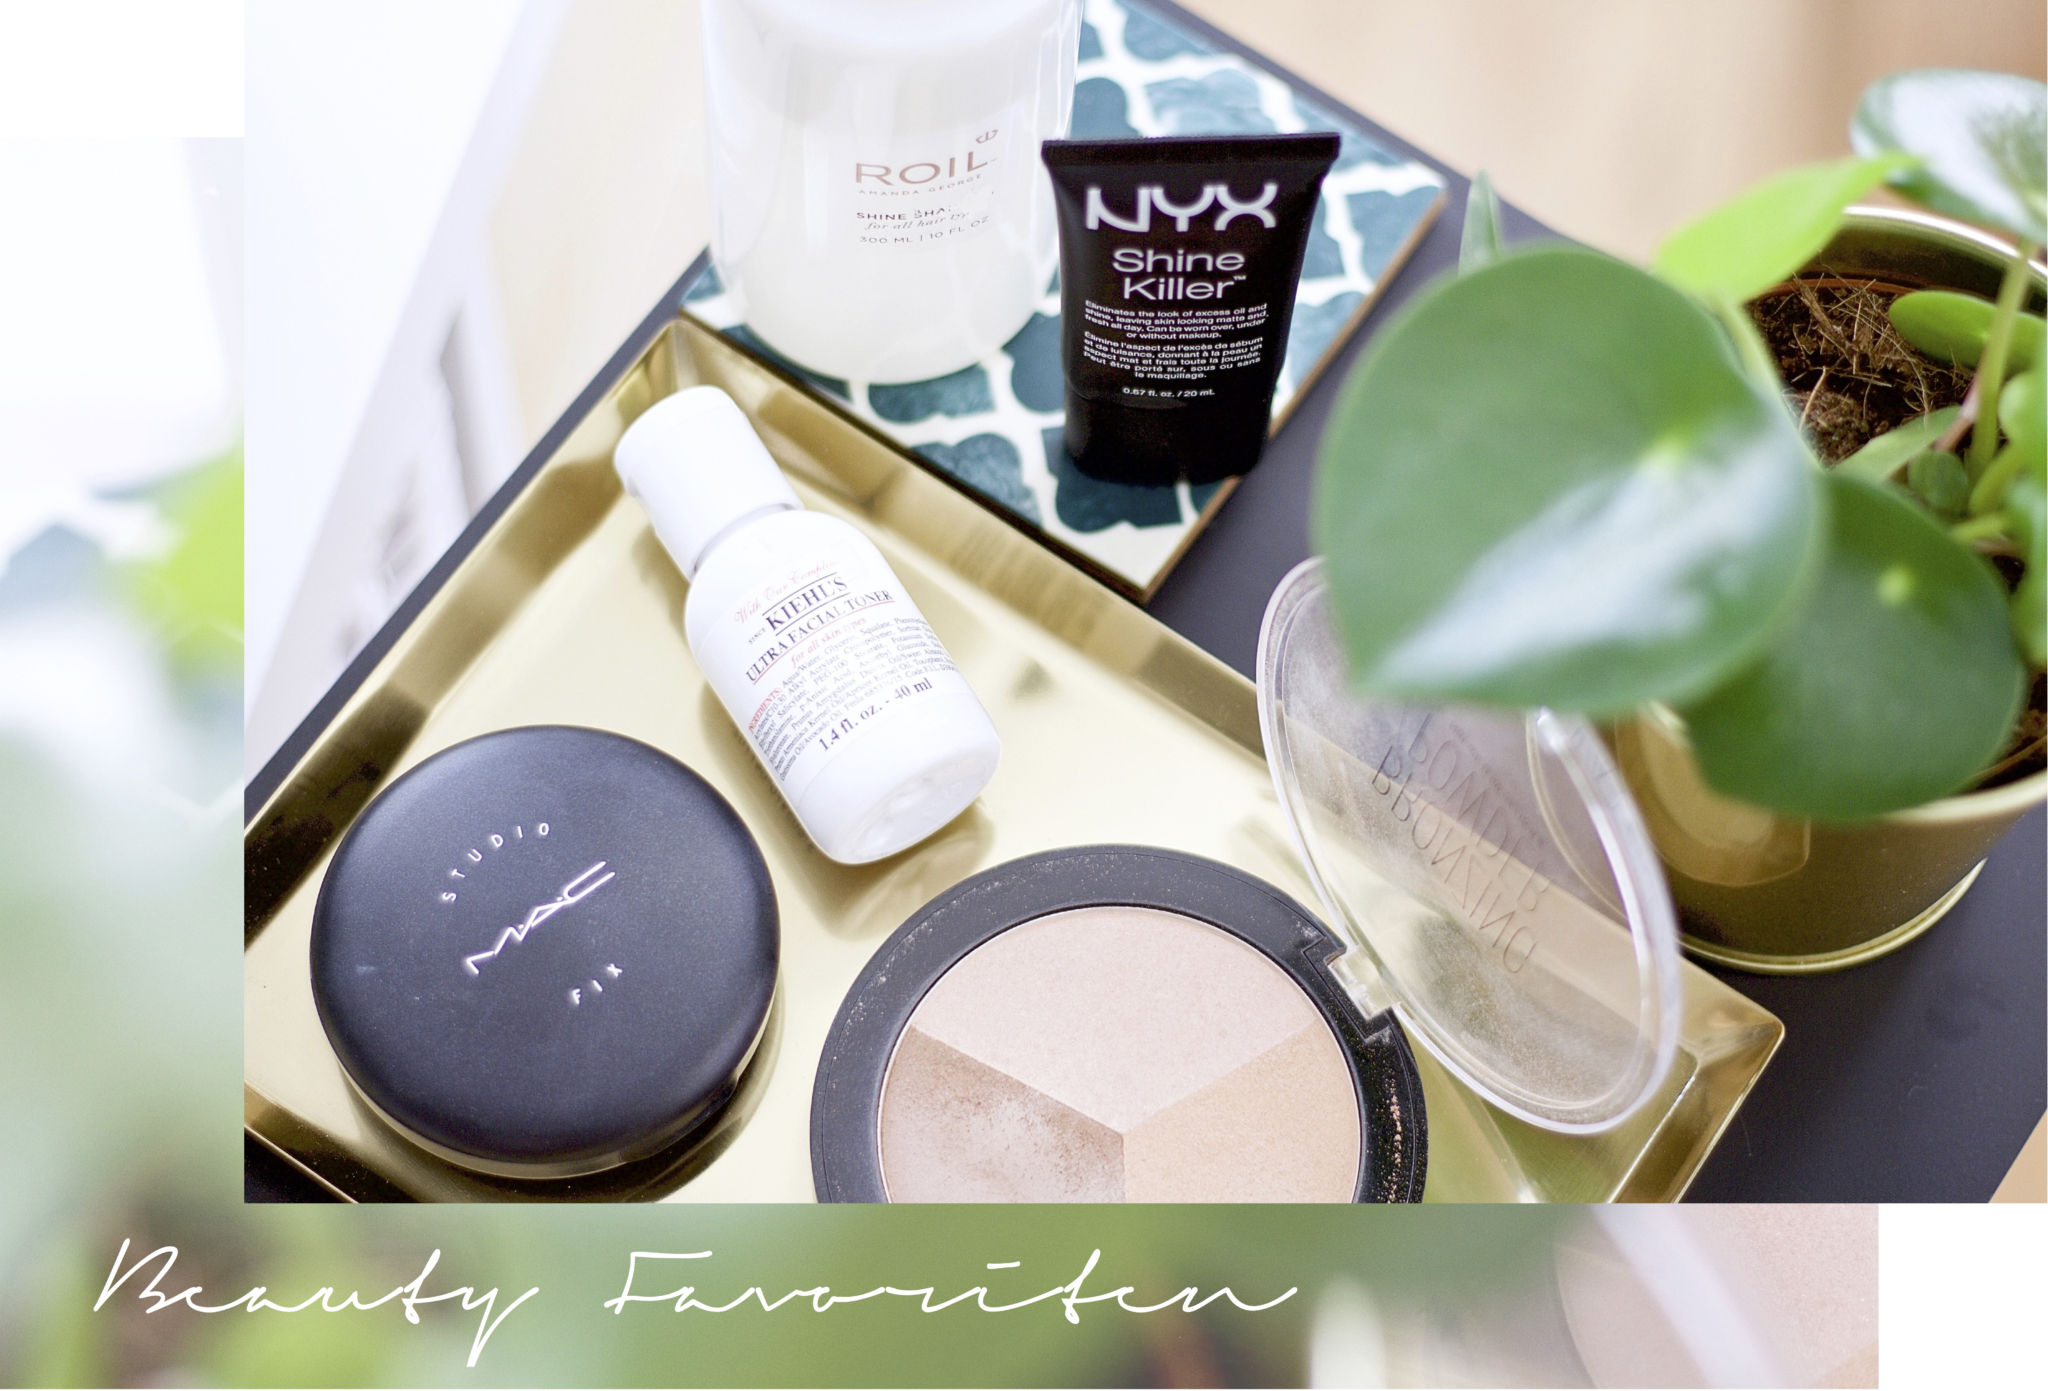 Titel Collage mit allen Beauty Produkten: End of Summer Beauty Favoriten: Kiehl's, MAC, ROIL, H&M, NYX - Beauty Blog aus Leipzig